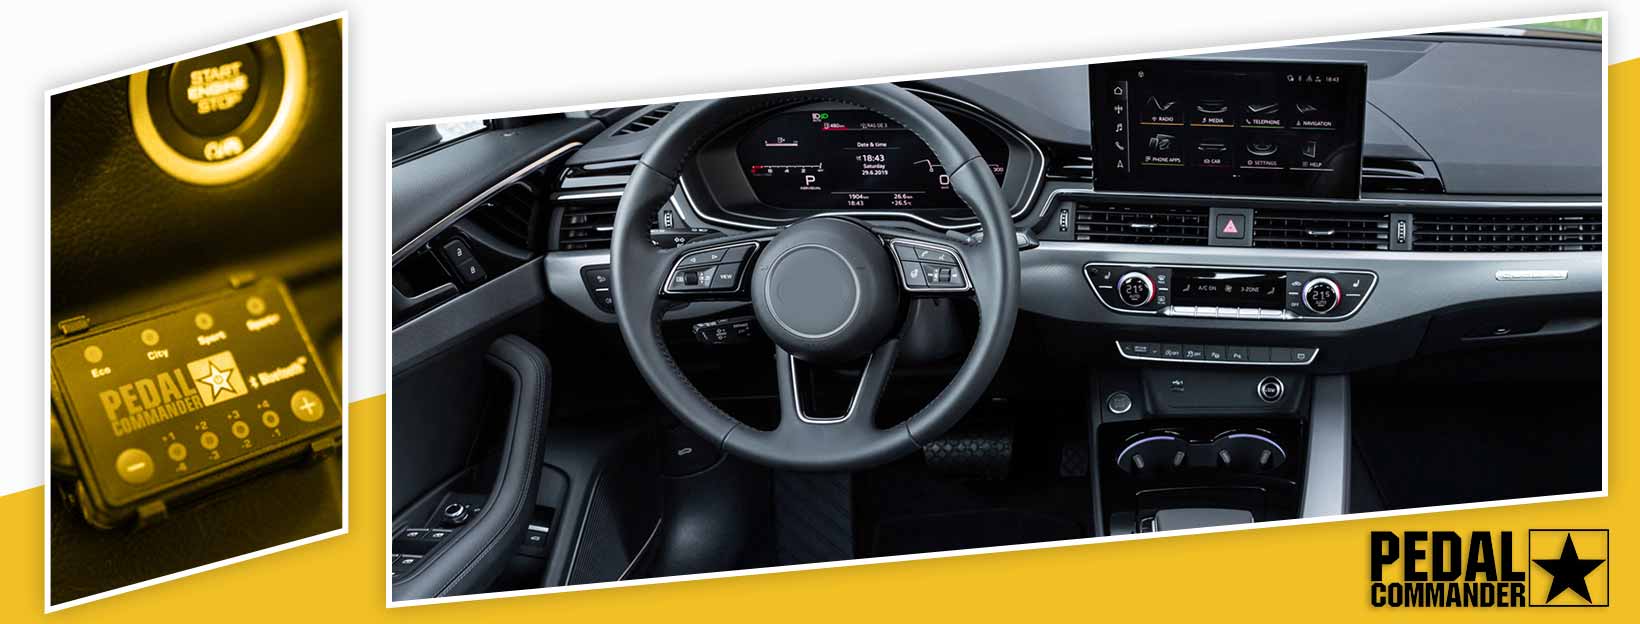 Pedal Commander for Audi S4 - interior